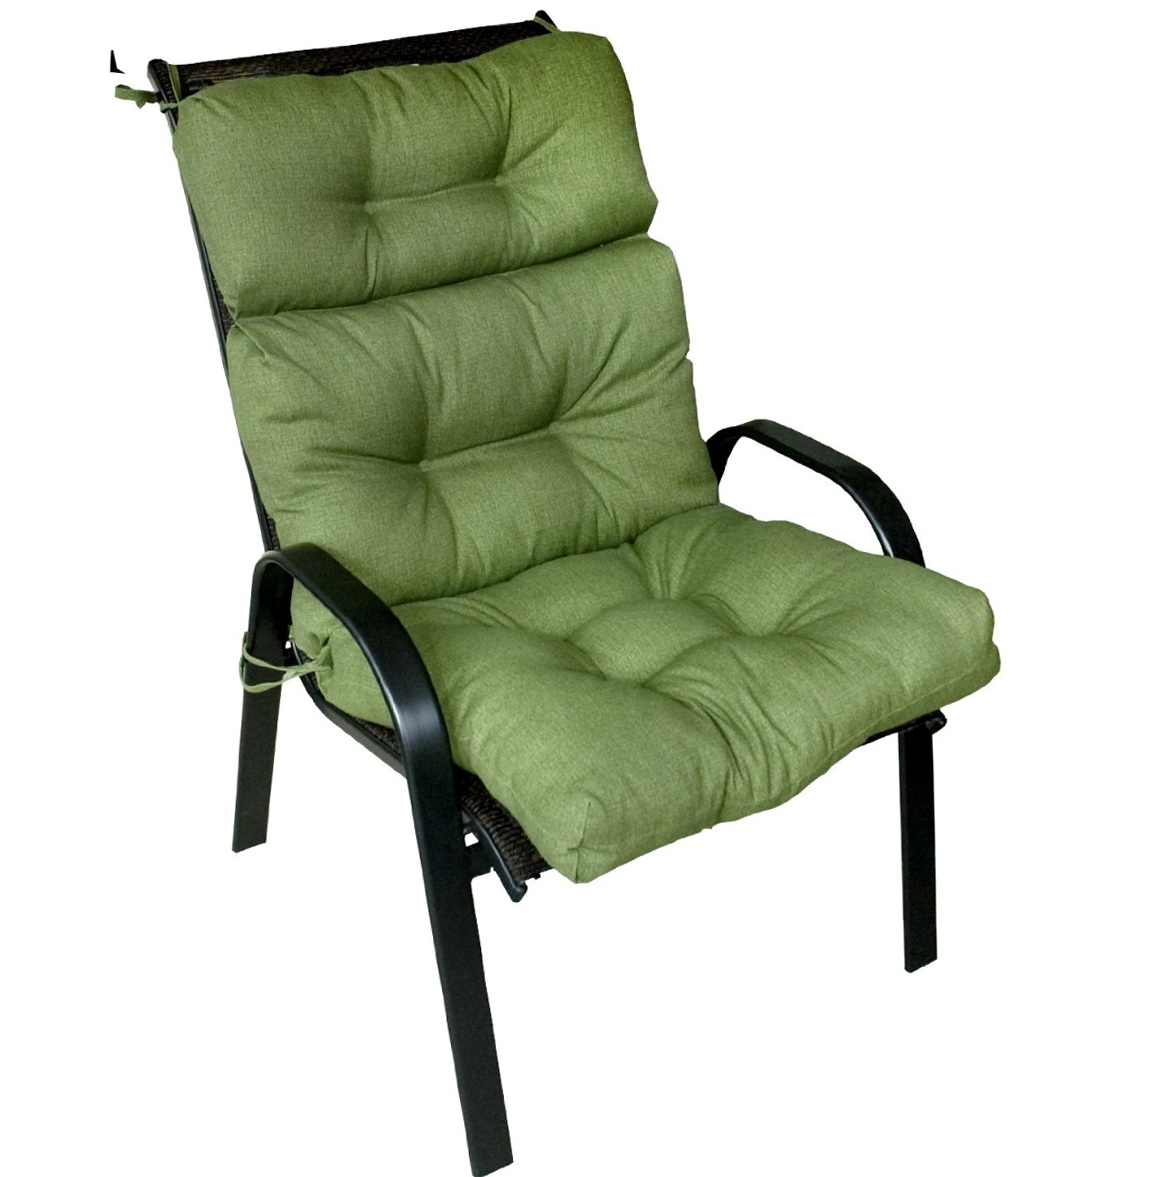 Back Chair Cushions Clearance Australia, Outdoor Furniture Cushions Clearance